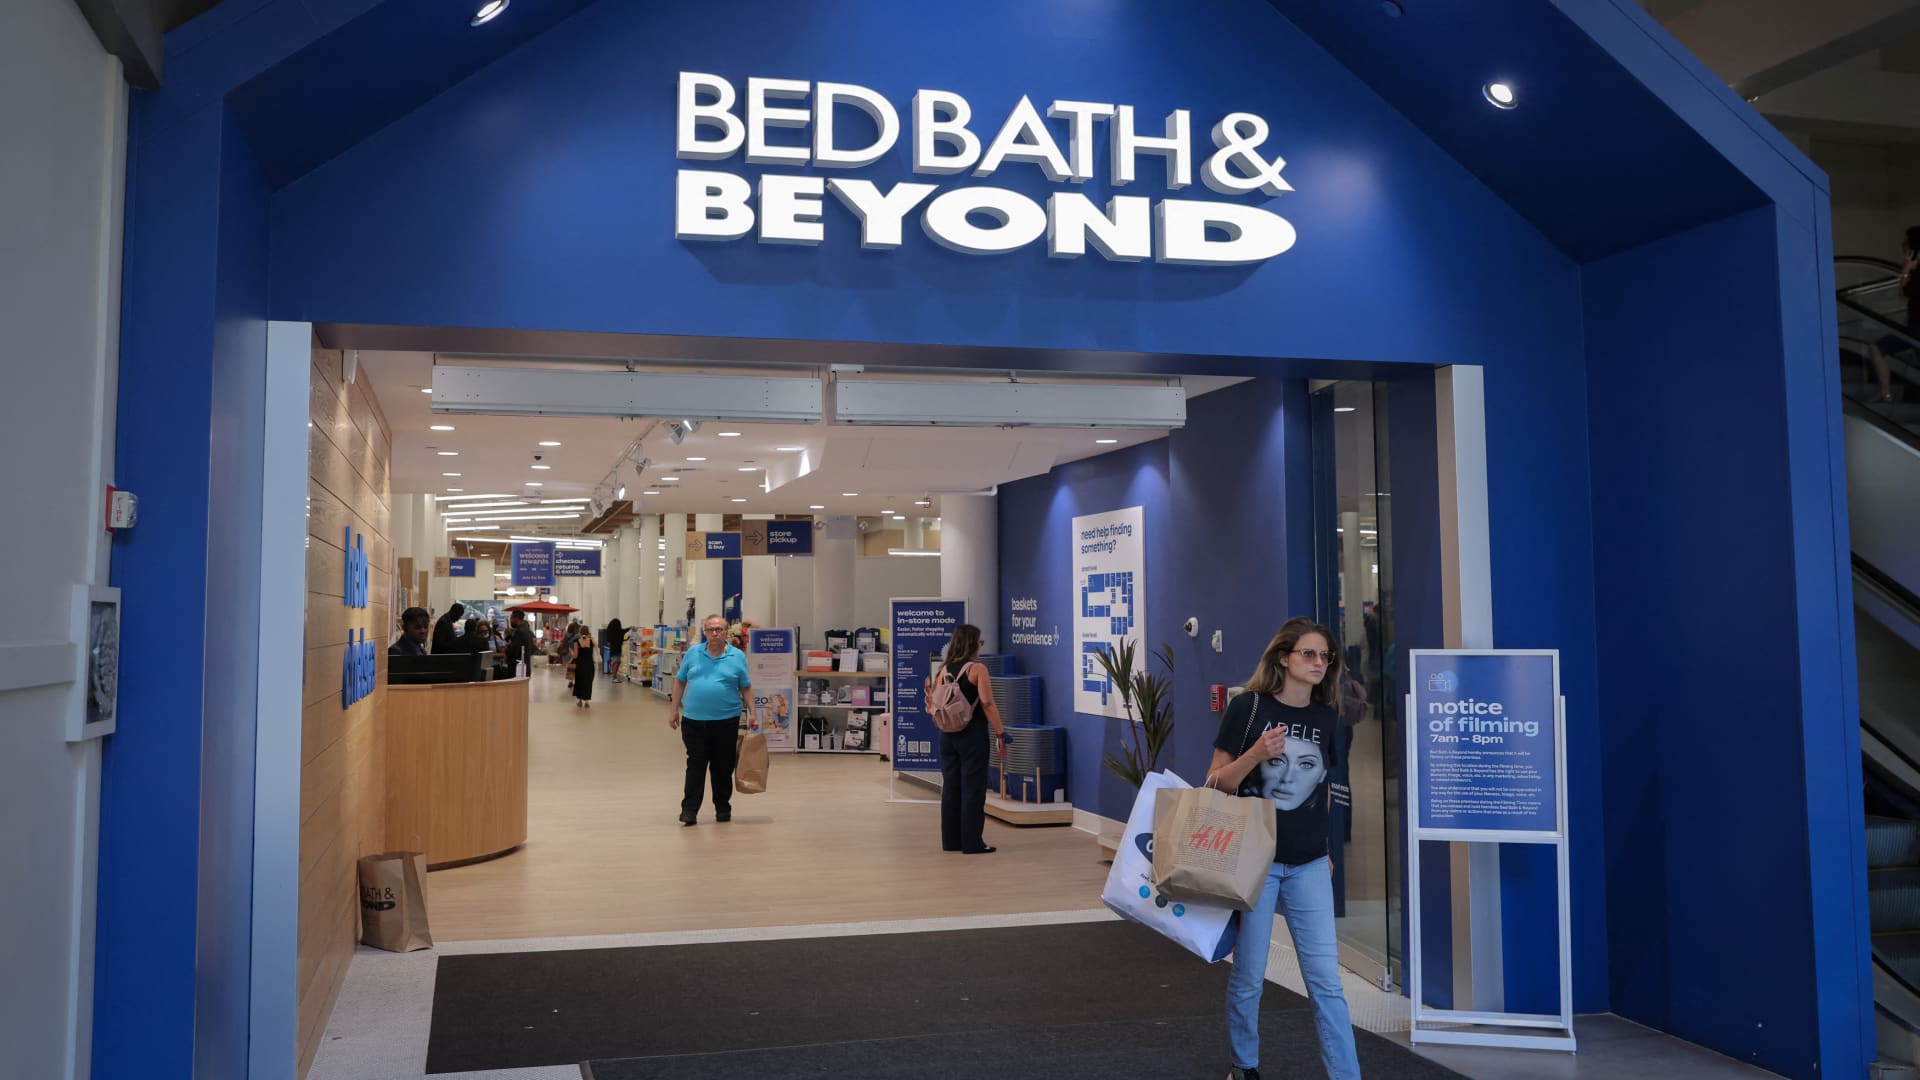 Bed Bath & Beyond merchandise problems could cripple turnaround plan